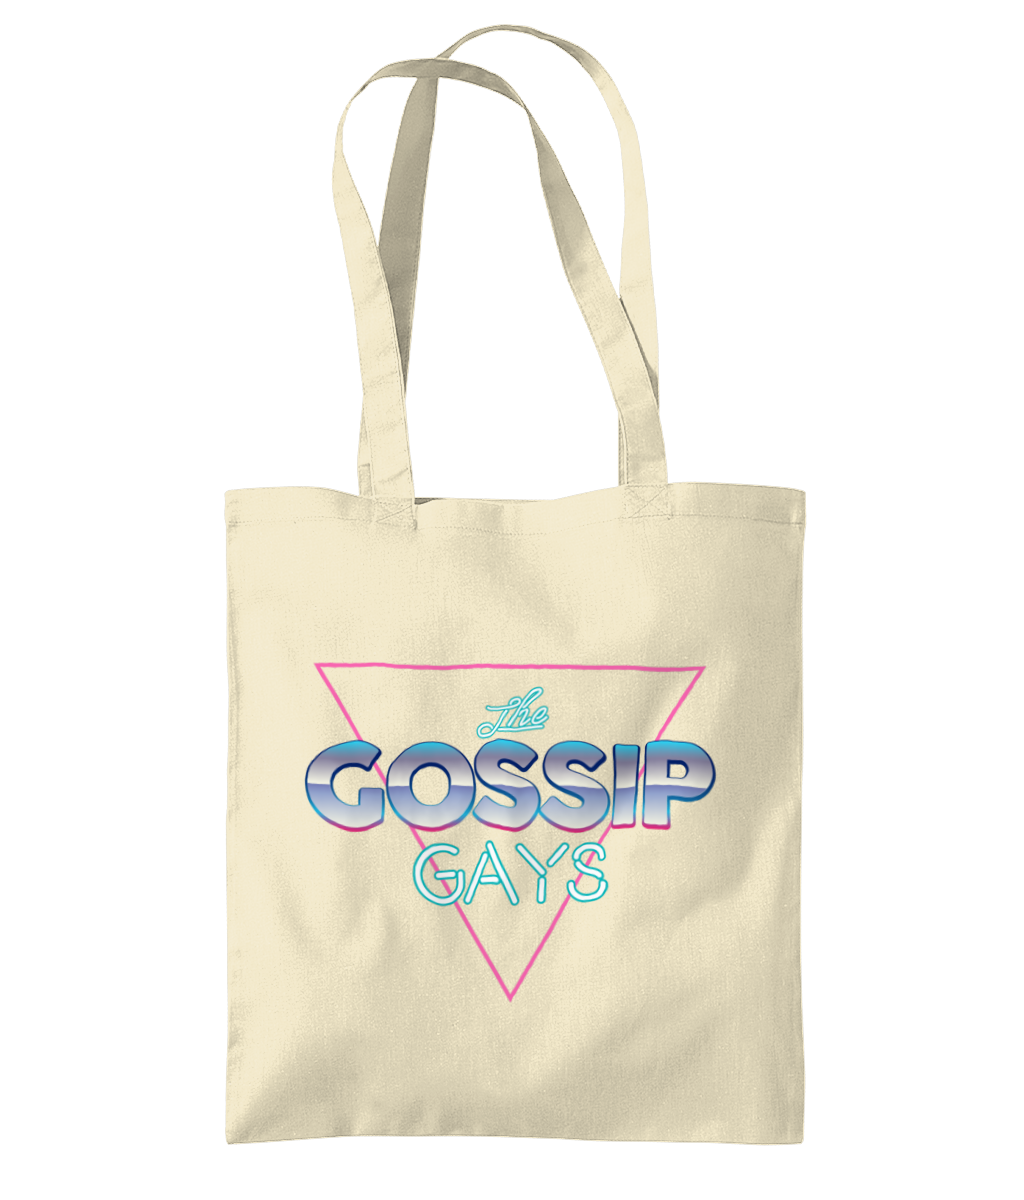 The Gossip Gays Tote Bag